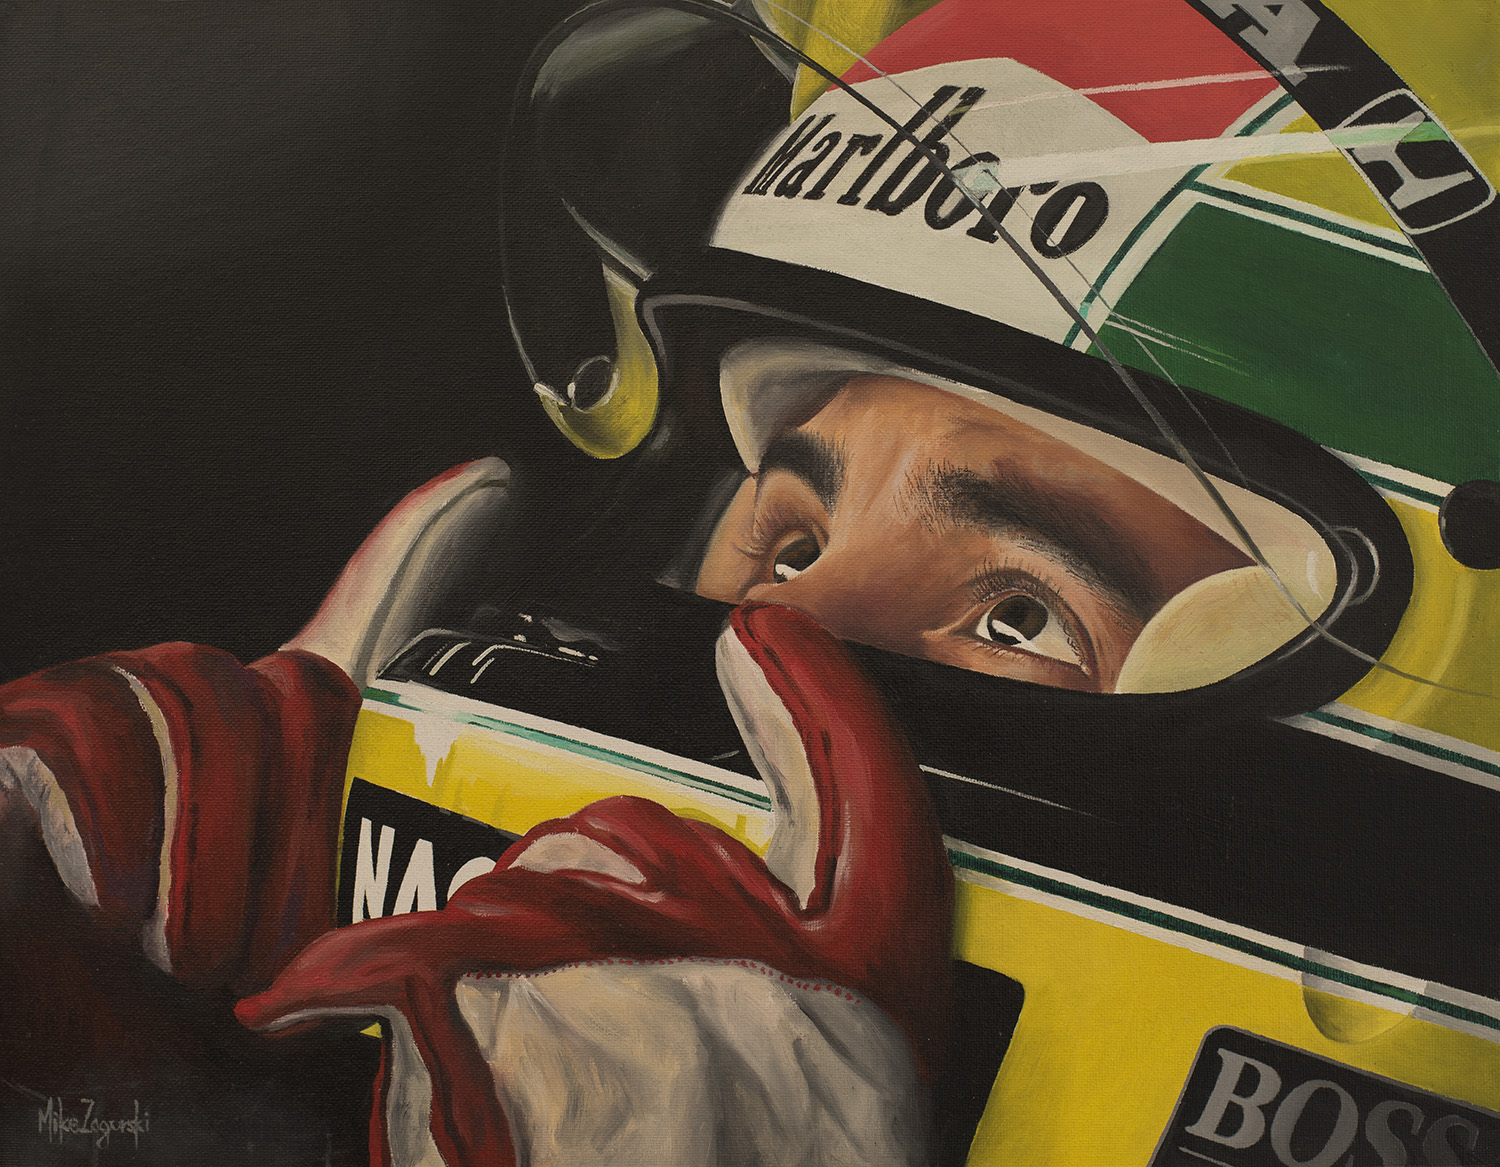 [ORIGINAL] Ayrton Senna